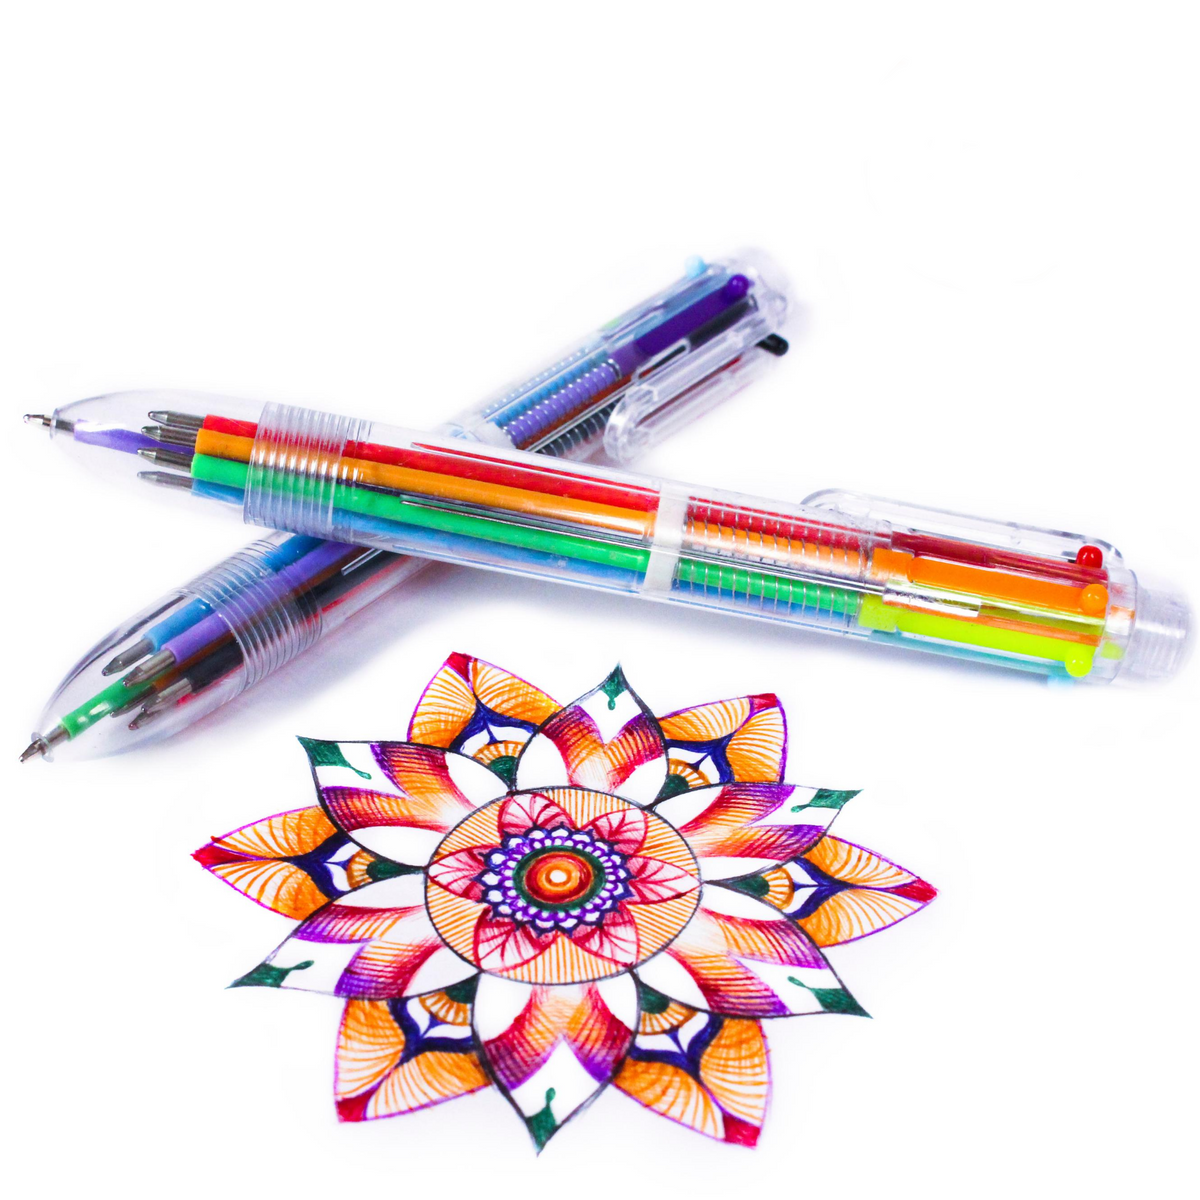 https://www.momjunction.com/wp-content/uploads/product-images/hieno-supplies-multicolor-pens_afl495.png